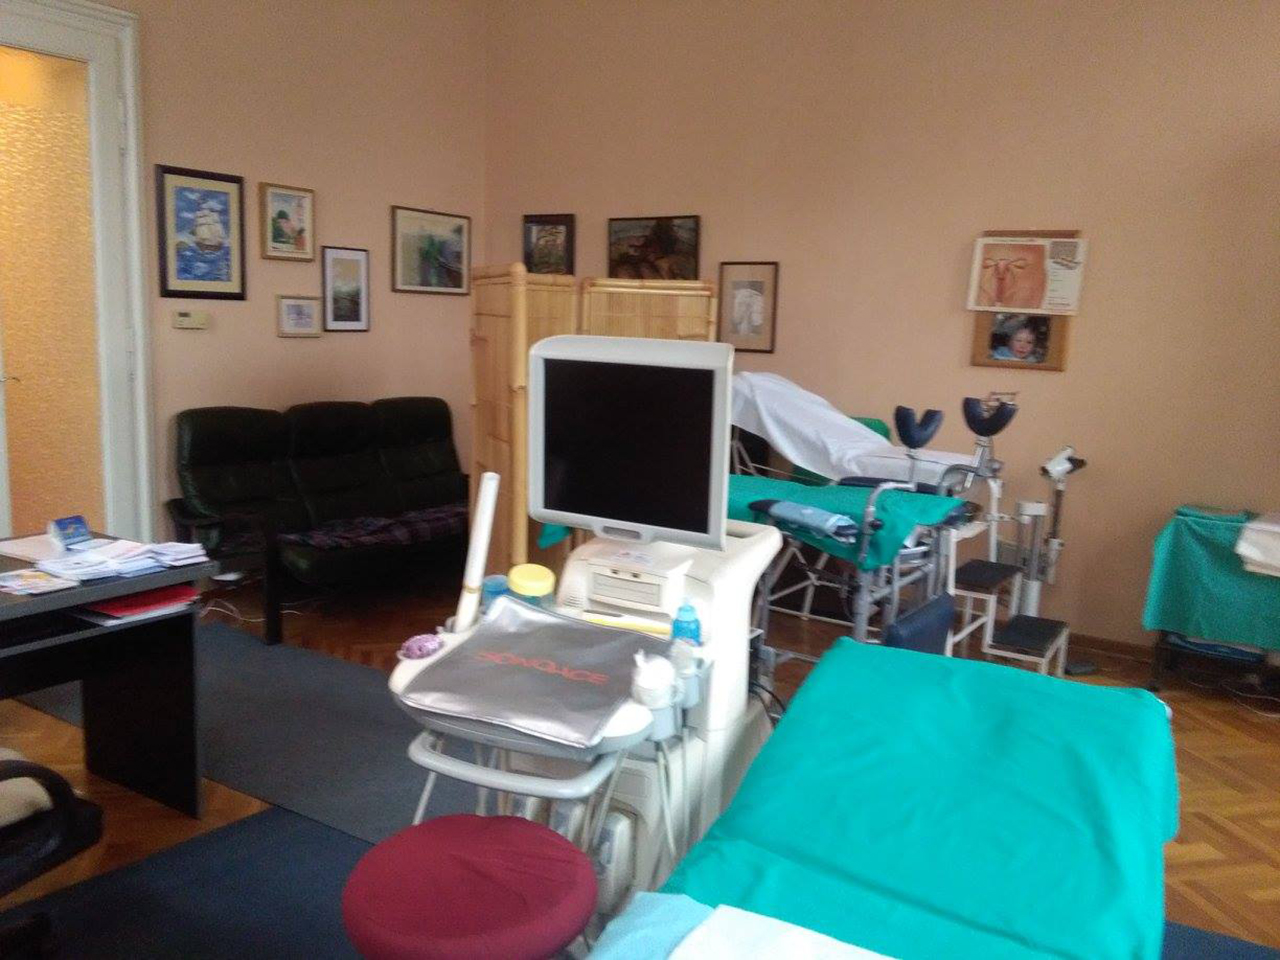 Photo 2 - GYNECOLOGY ORDINATION BOLESNIKOV - Gynecological offices, Pancevo